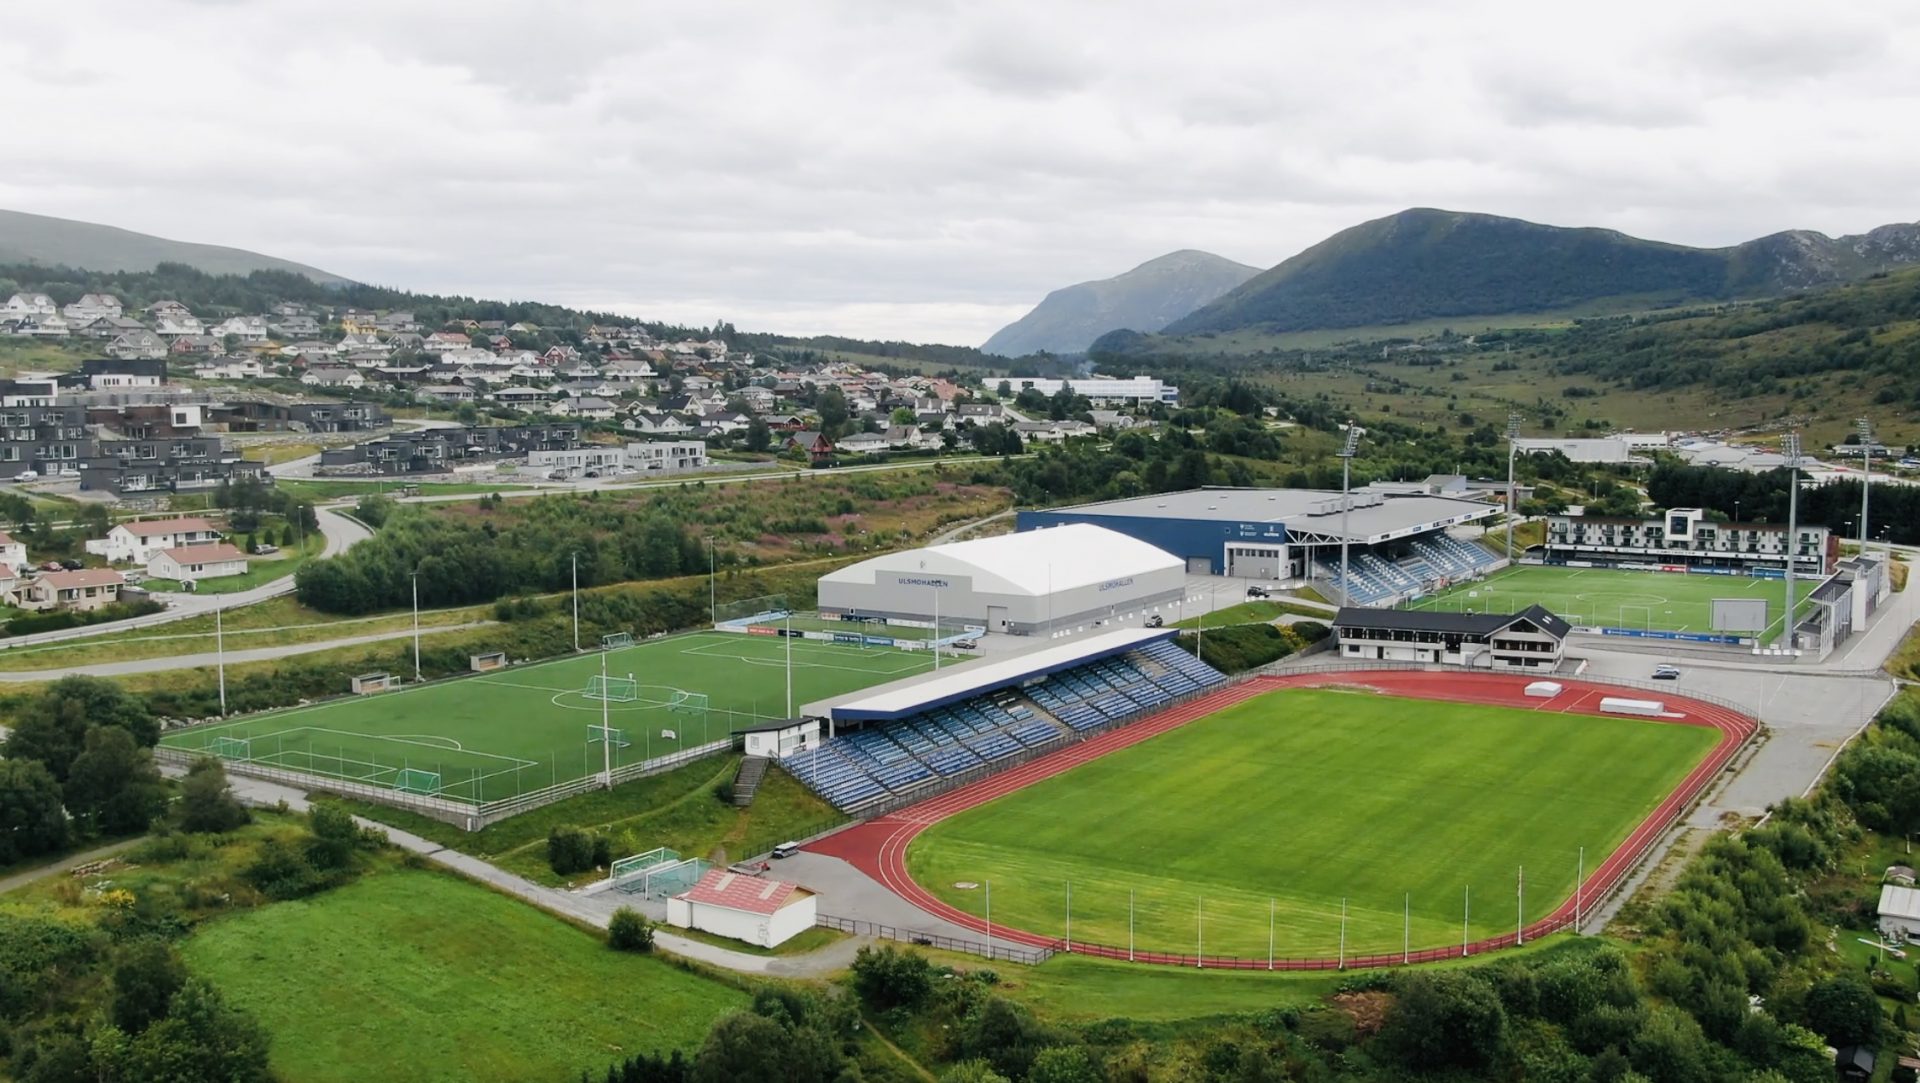 hødd-høddvoll-stadion-ulsteinvik-ulstein-kommune-sport-idrett